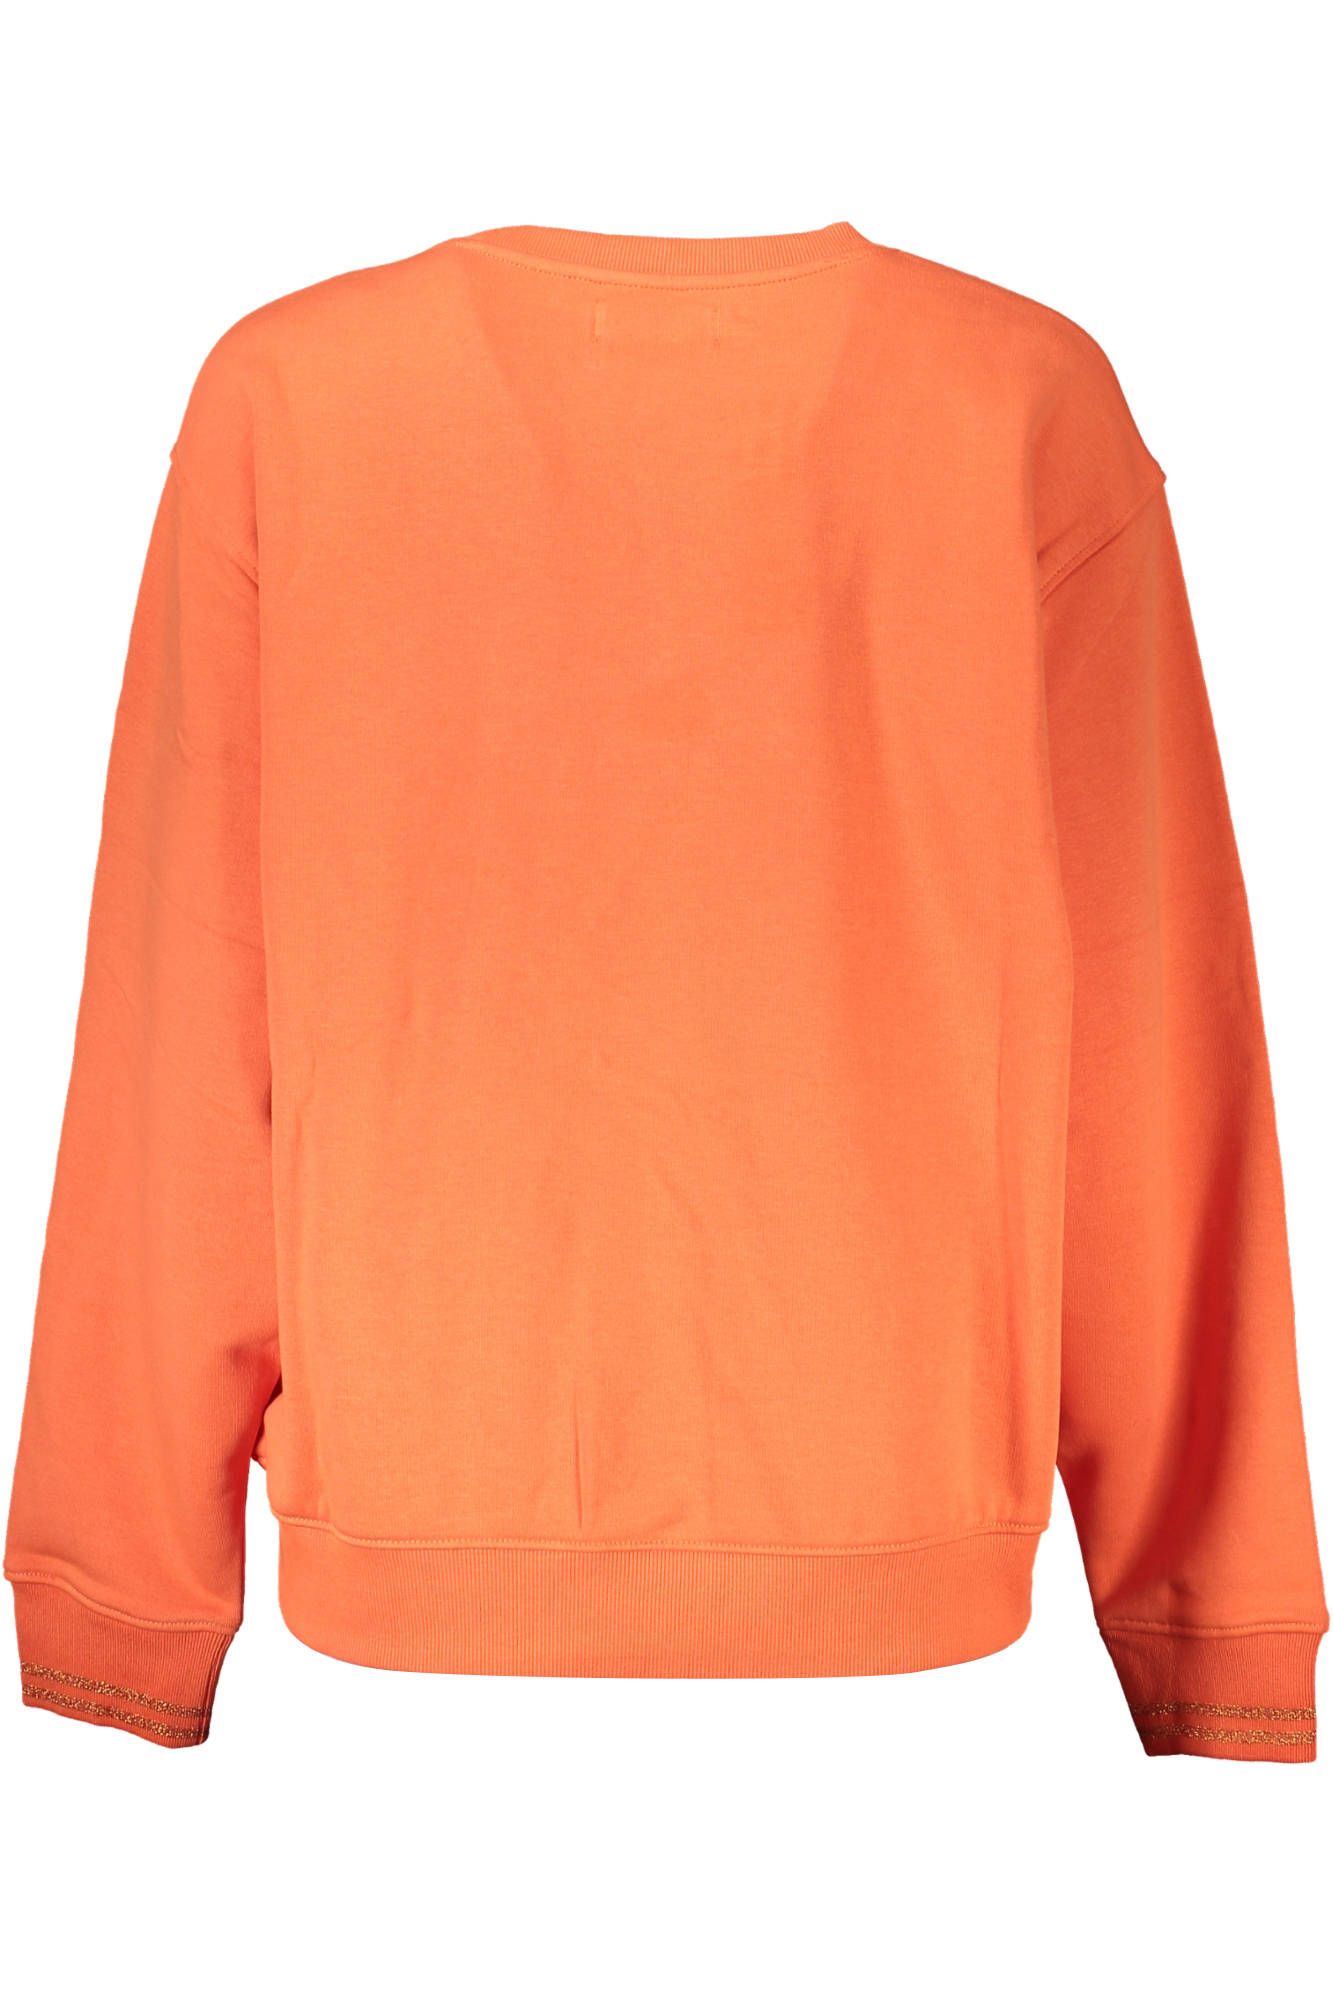 Desigual Vibrant Orange Sweatshirt with Chic Logo Detail